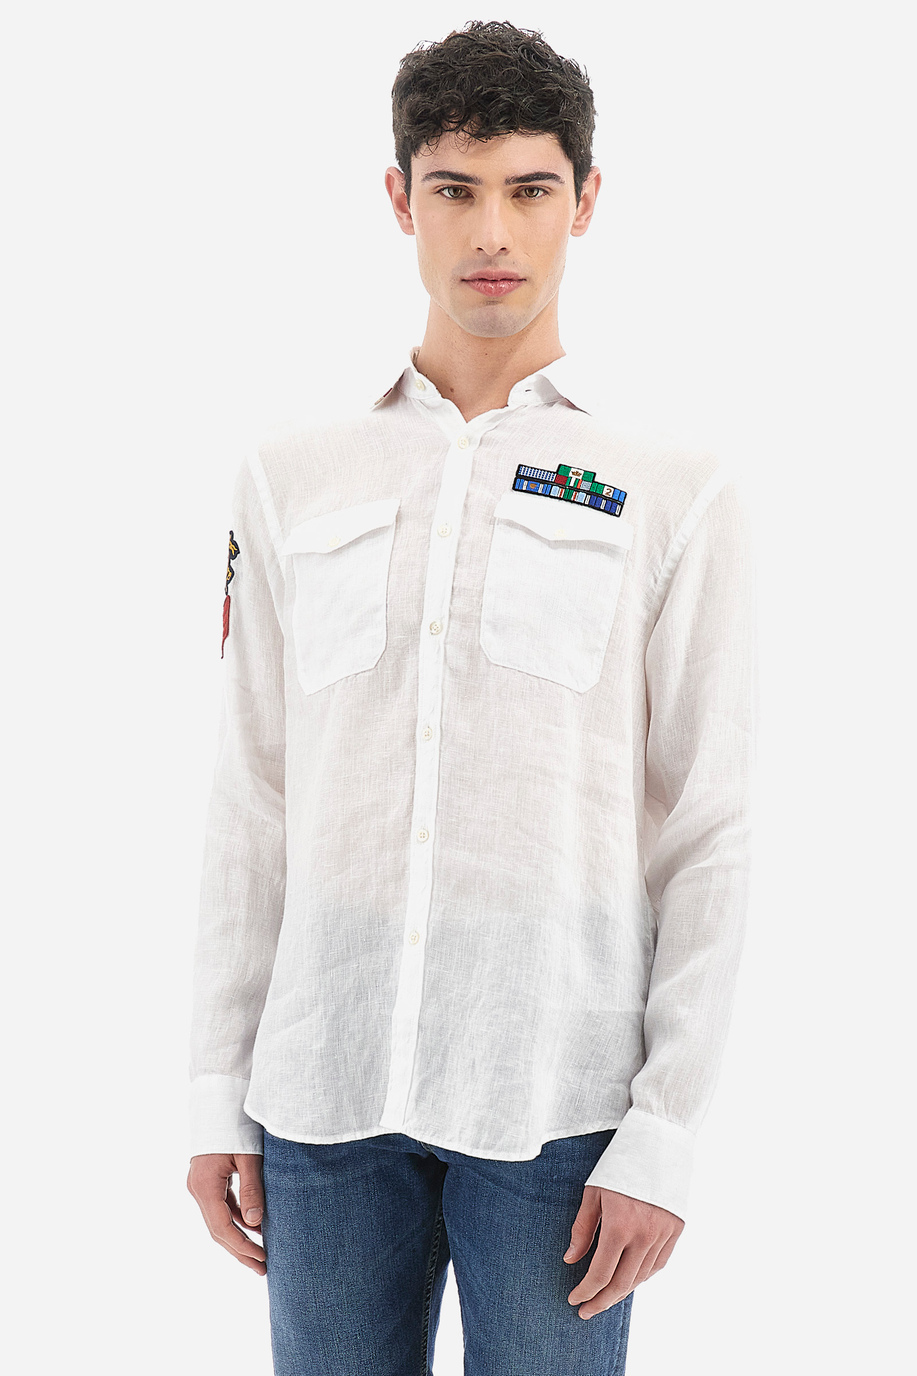 Langärmliges Herrenhemd aus 100 % Leinen in normaler Passform - Viviano - Hemden | La Martina - Official Online Shop